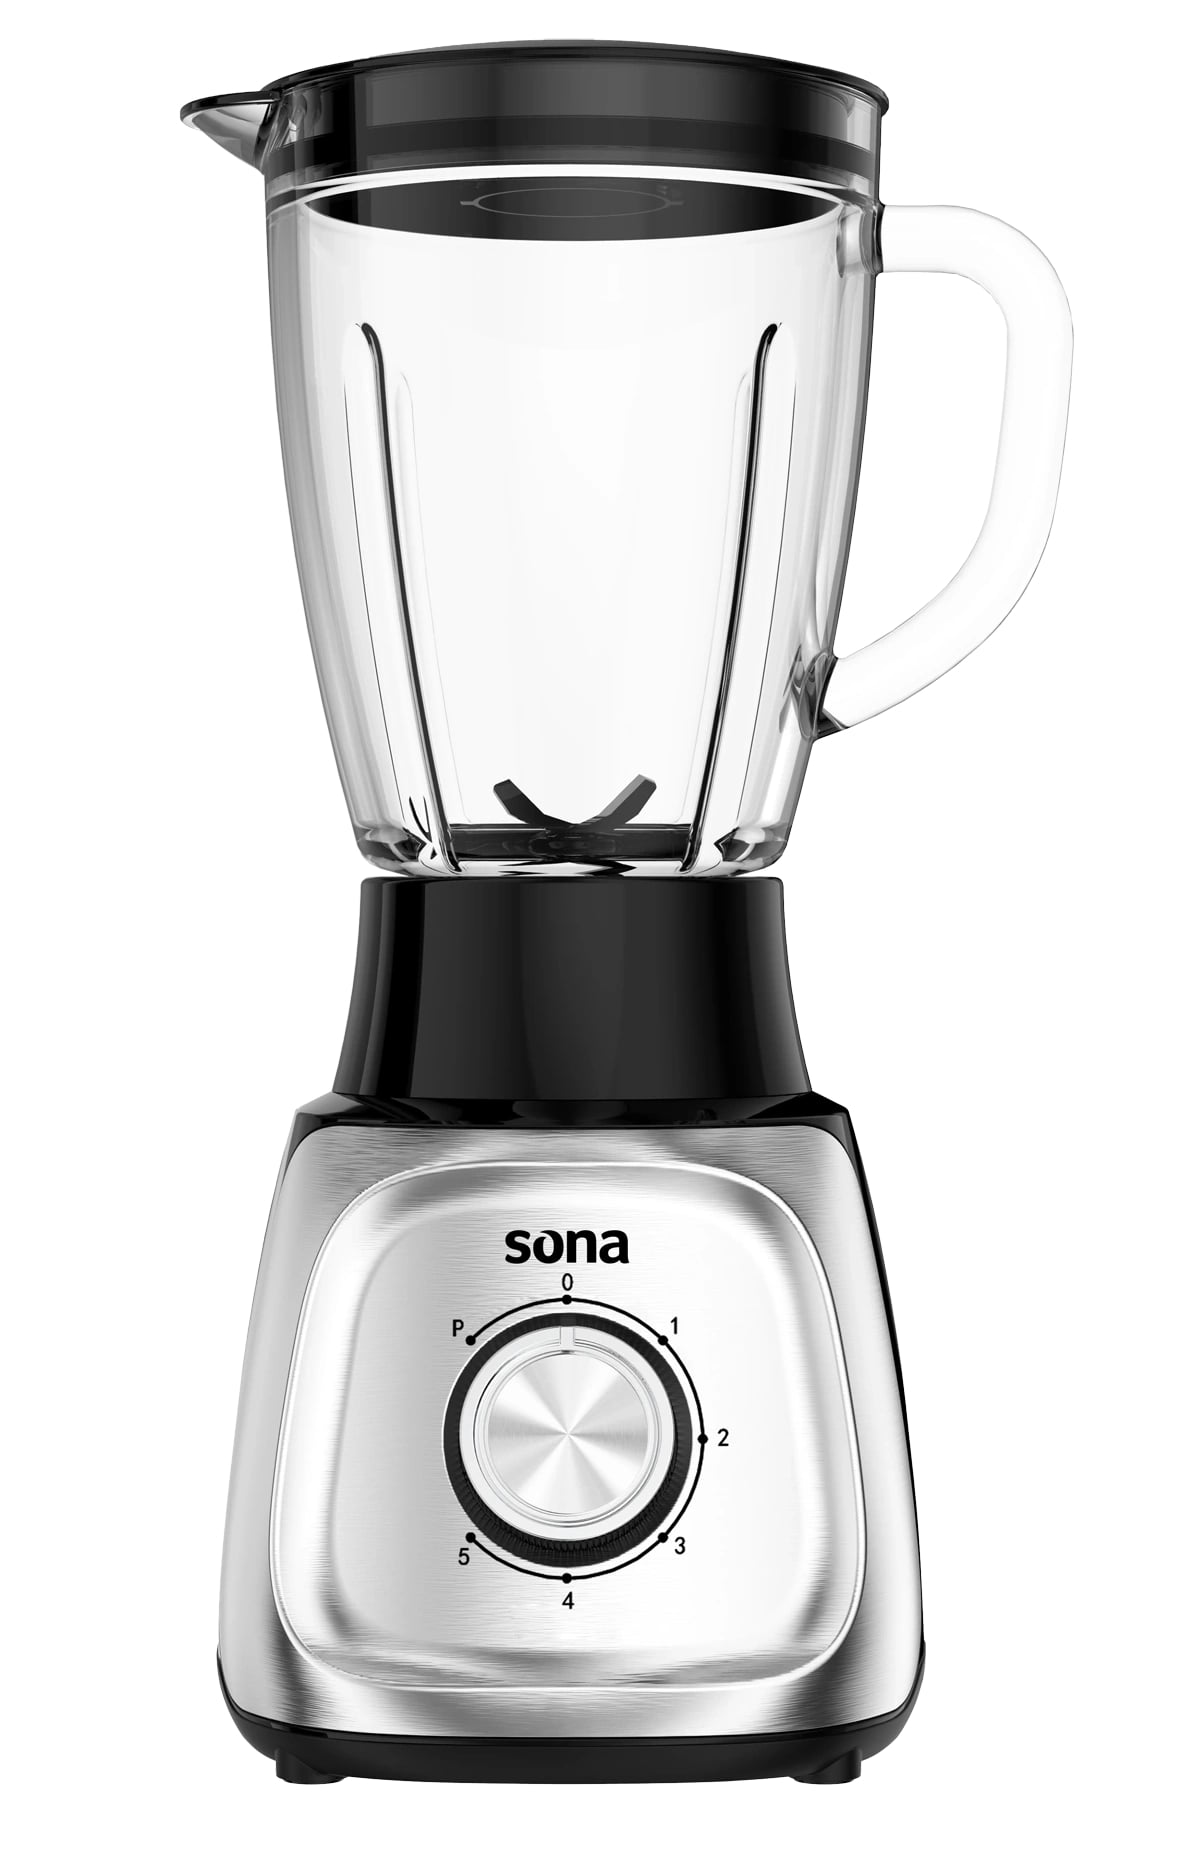 Sona Blender 600 W Silver 1.5 L 2 speeds Glass jar